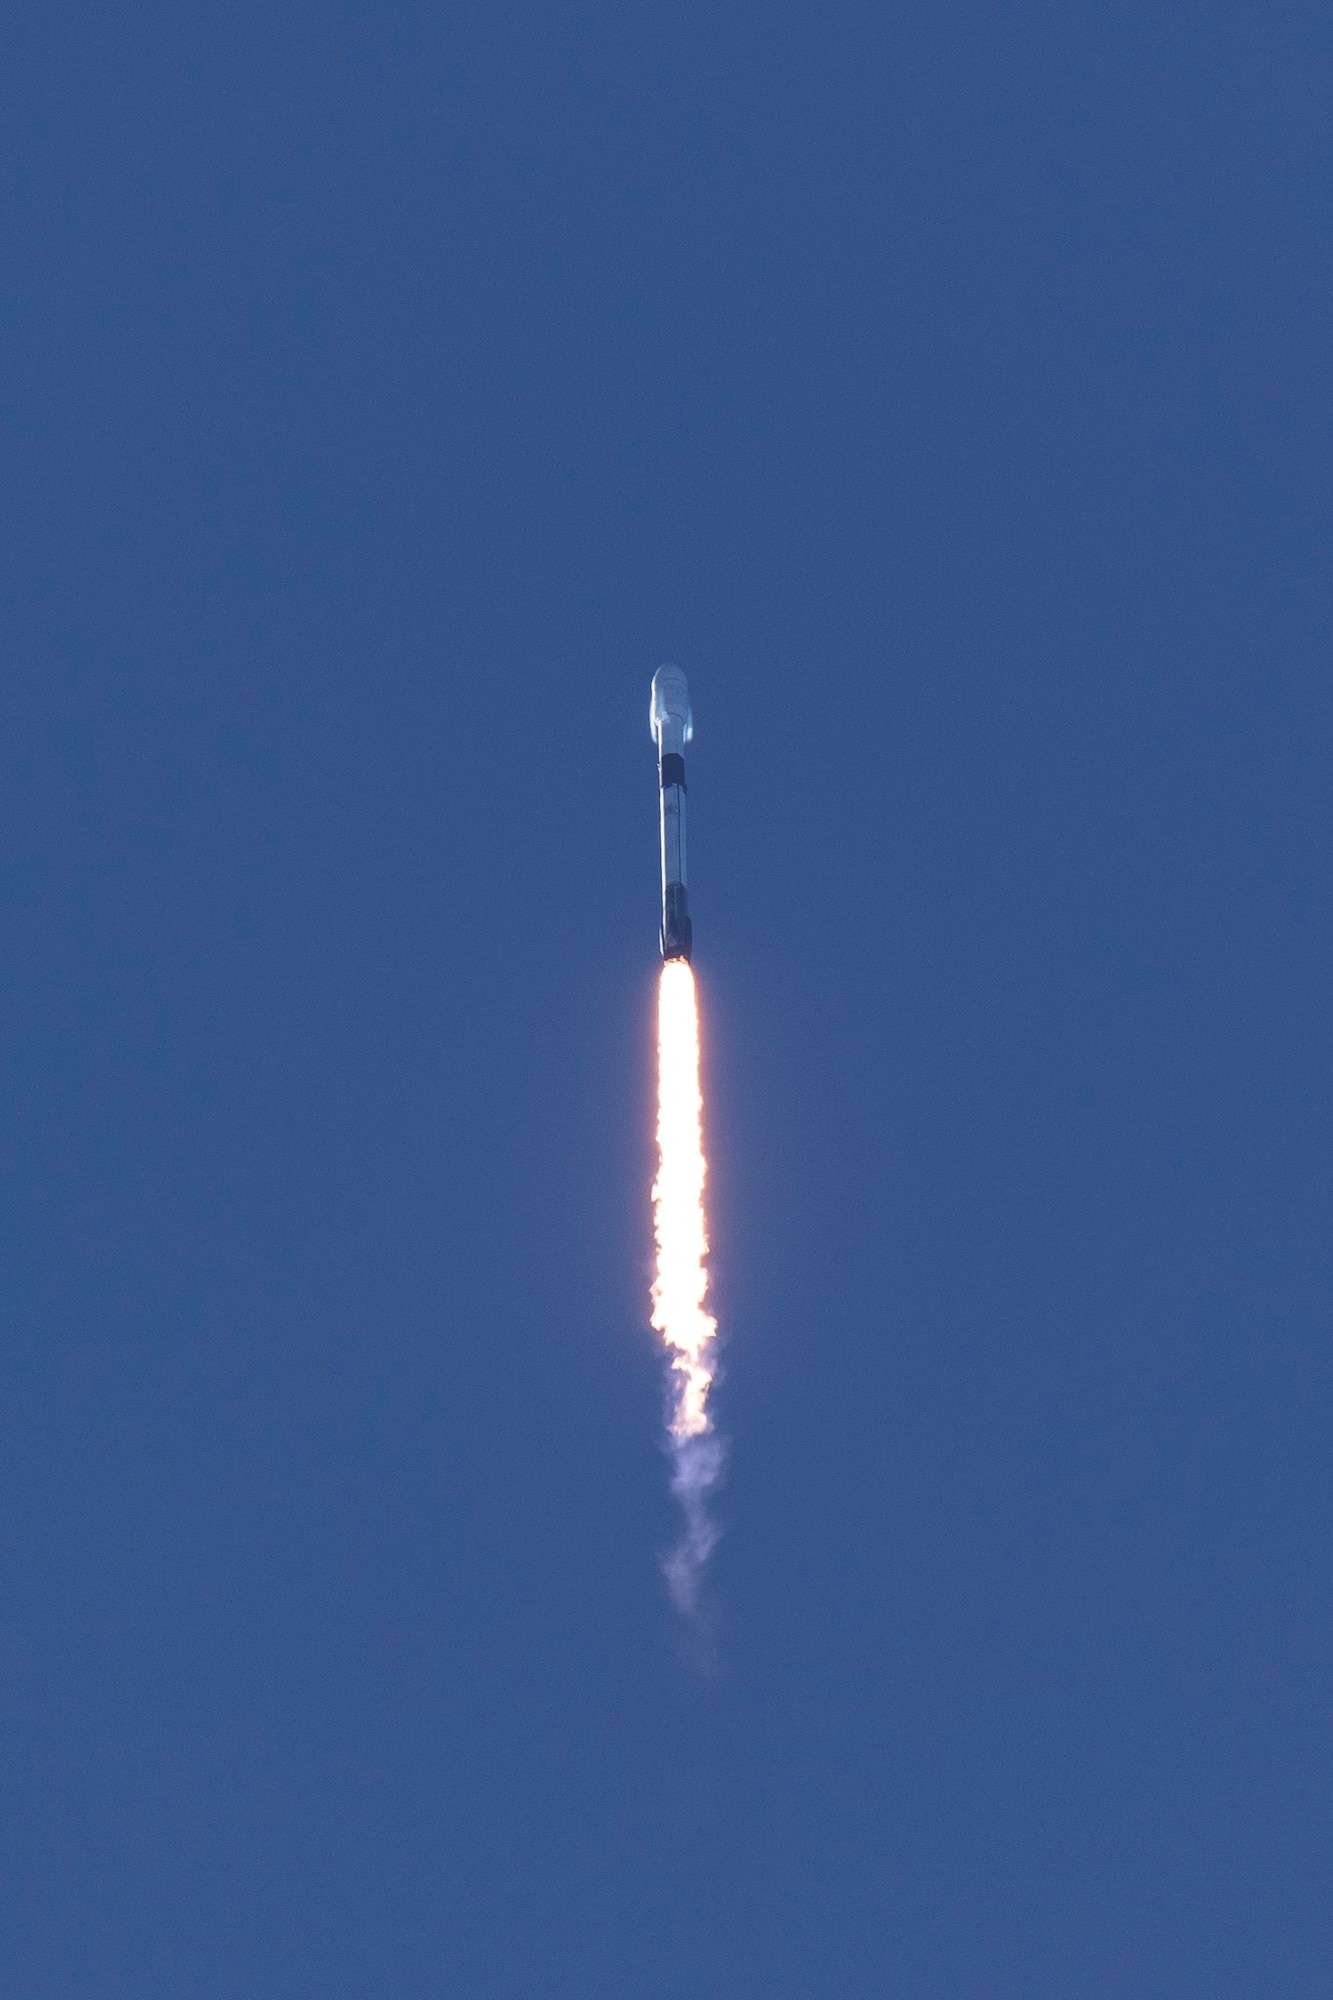 STPSAT-5 launch